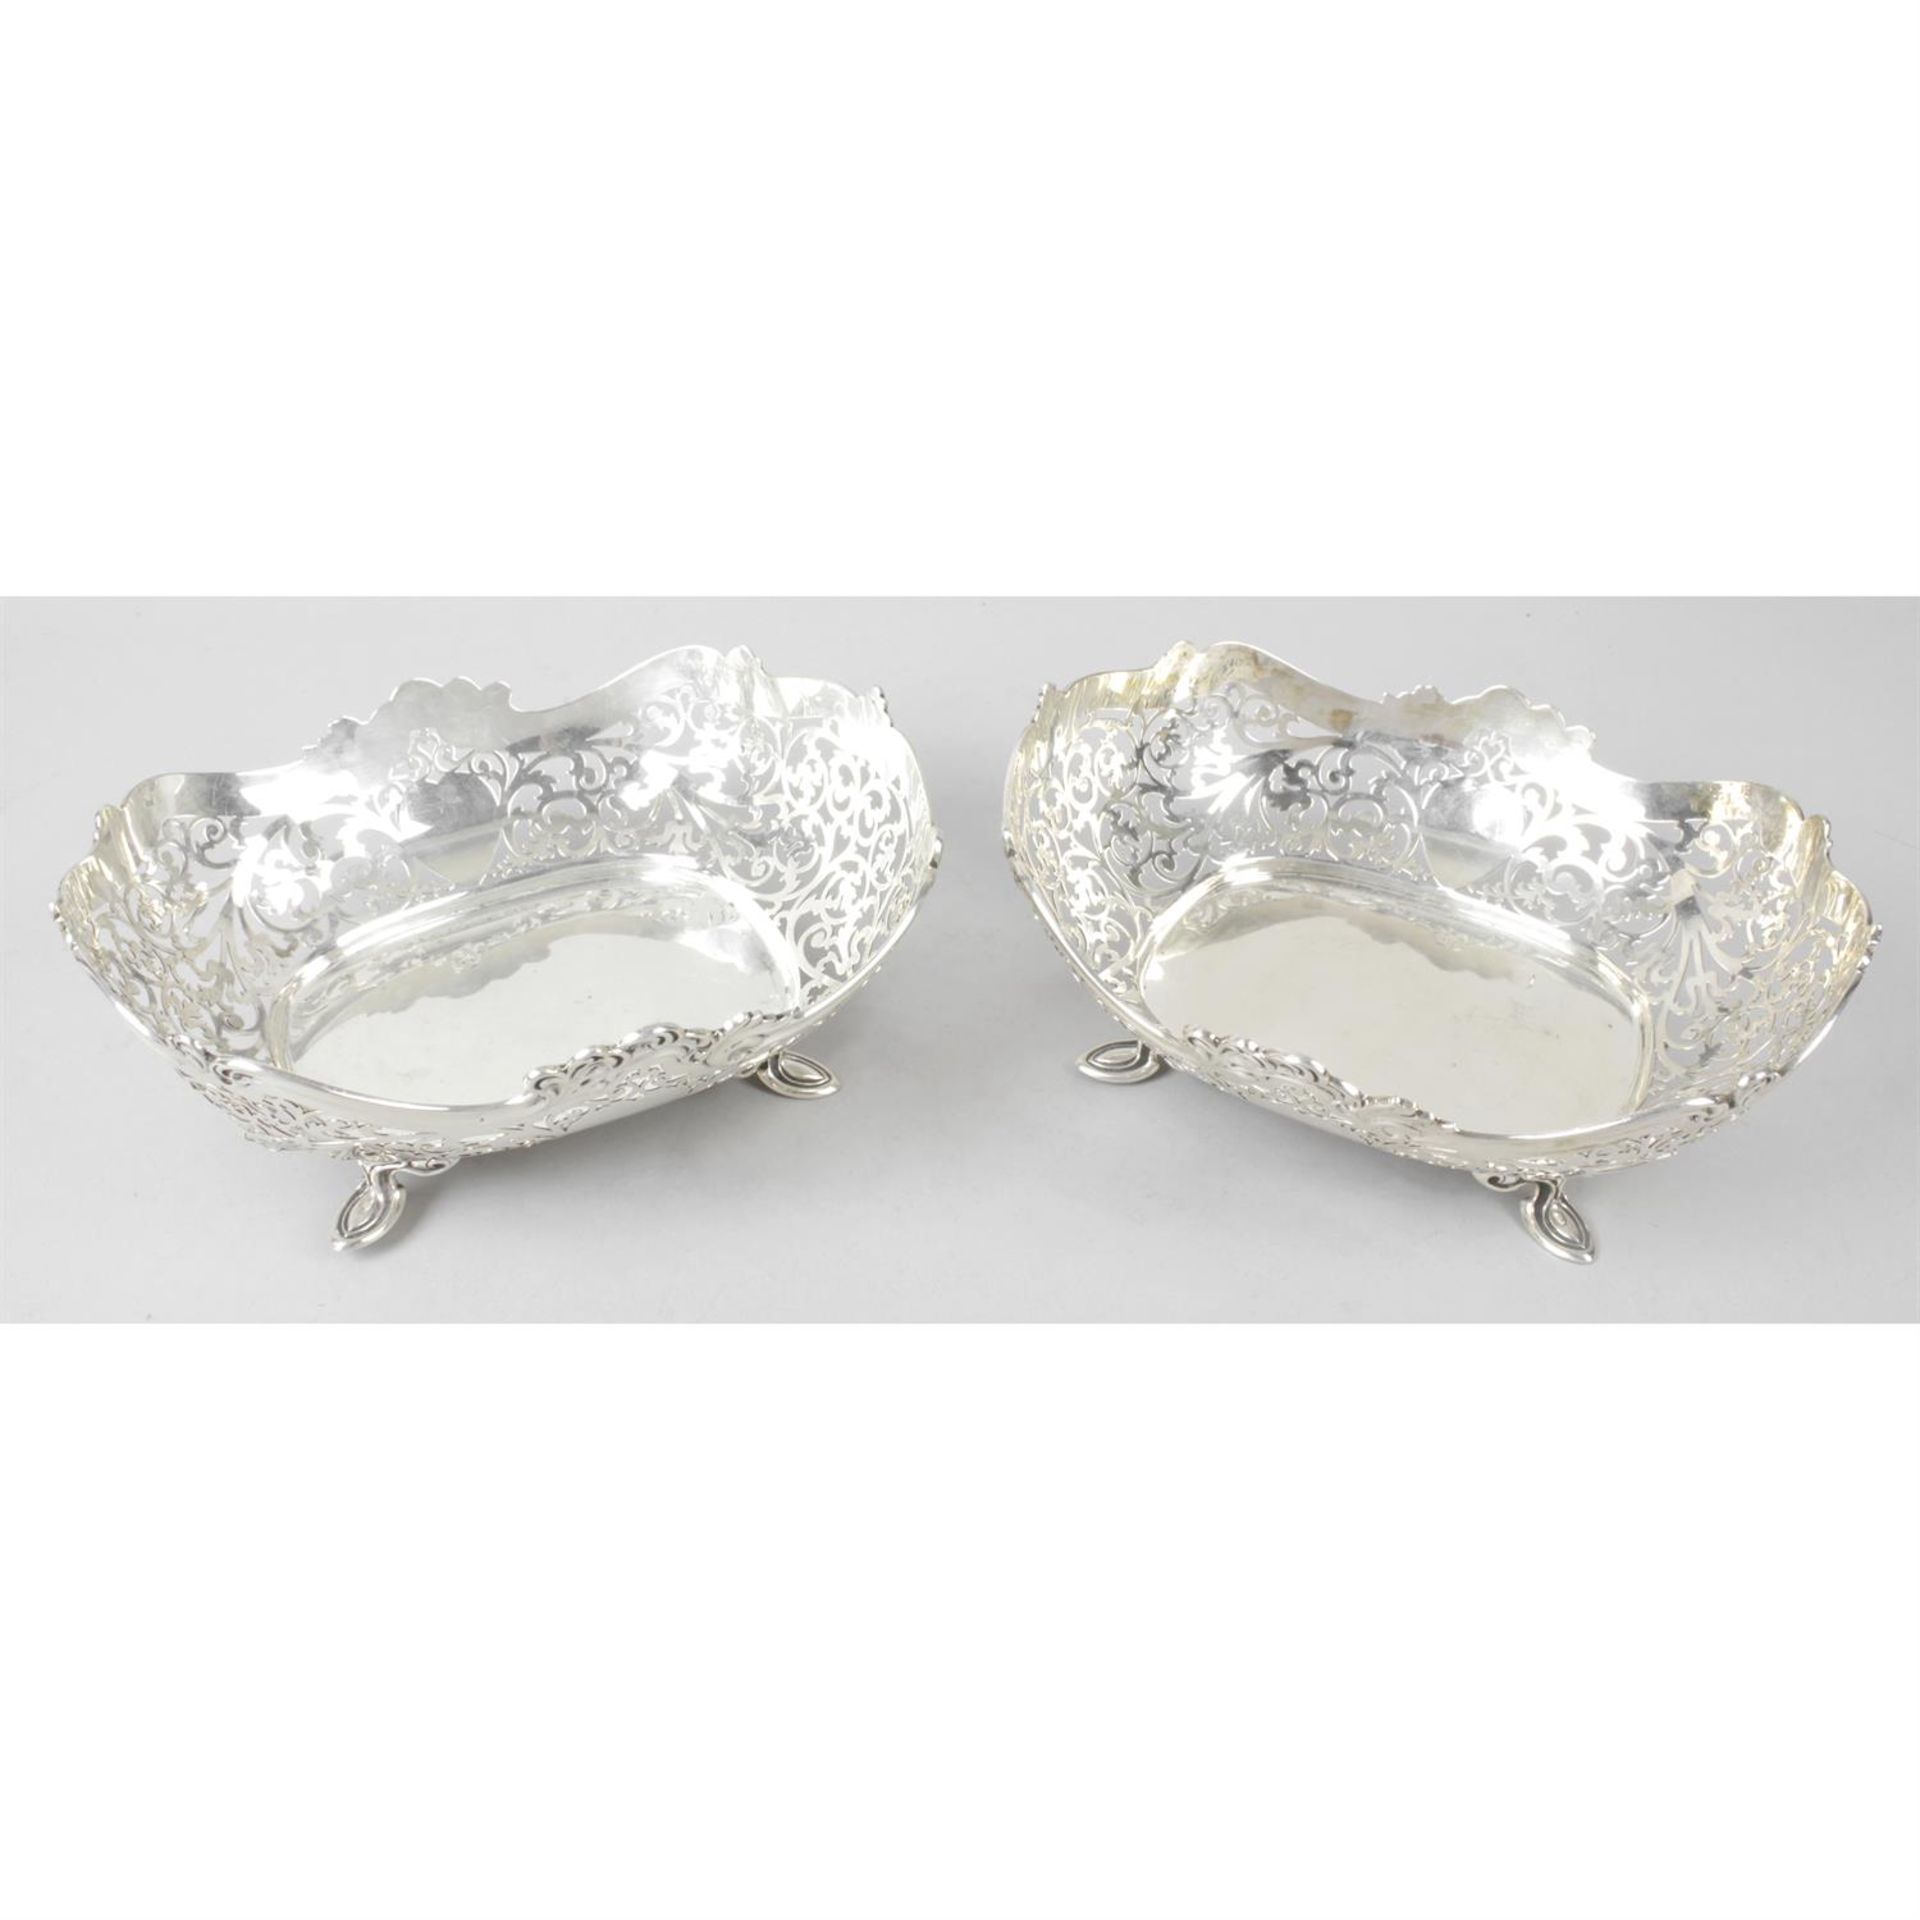 A pair of George V silver pierced dishes, on foliate feet.